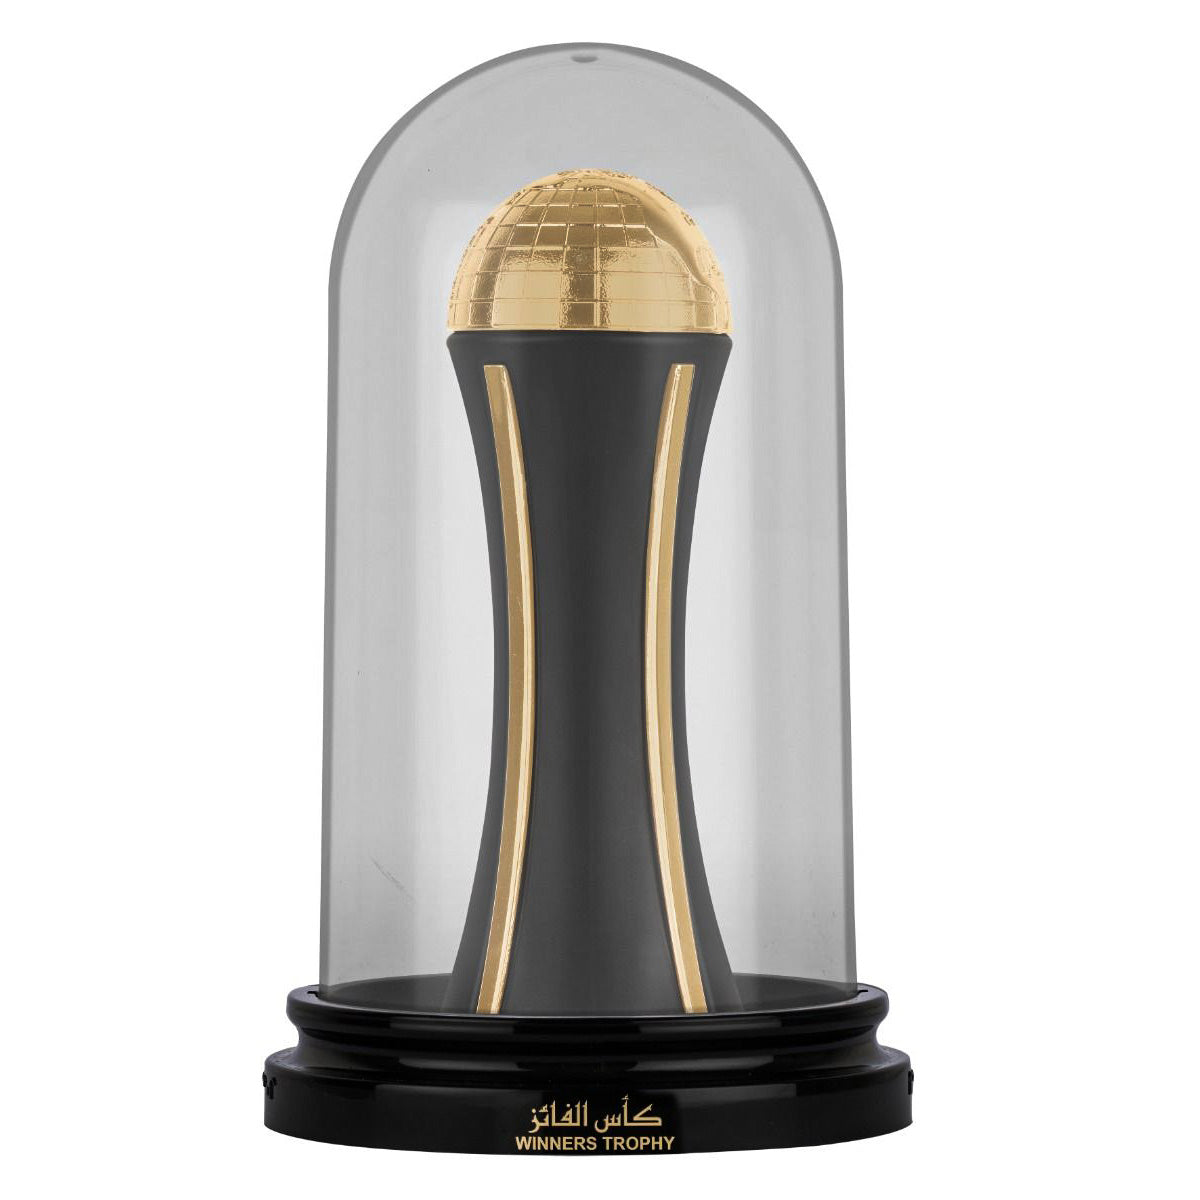 Winners Trophy Gold Eau De Parfum 100ml Lattafa Pride-almanaar Islamic Store